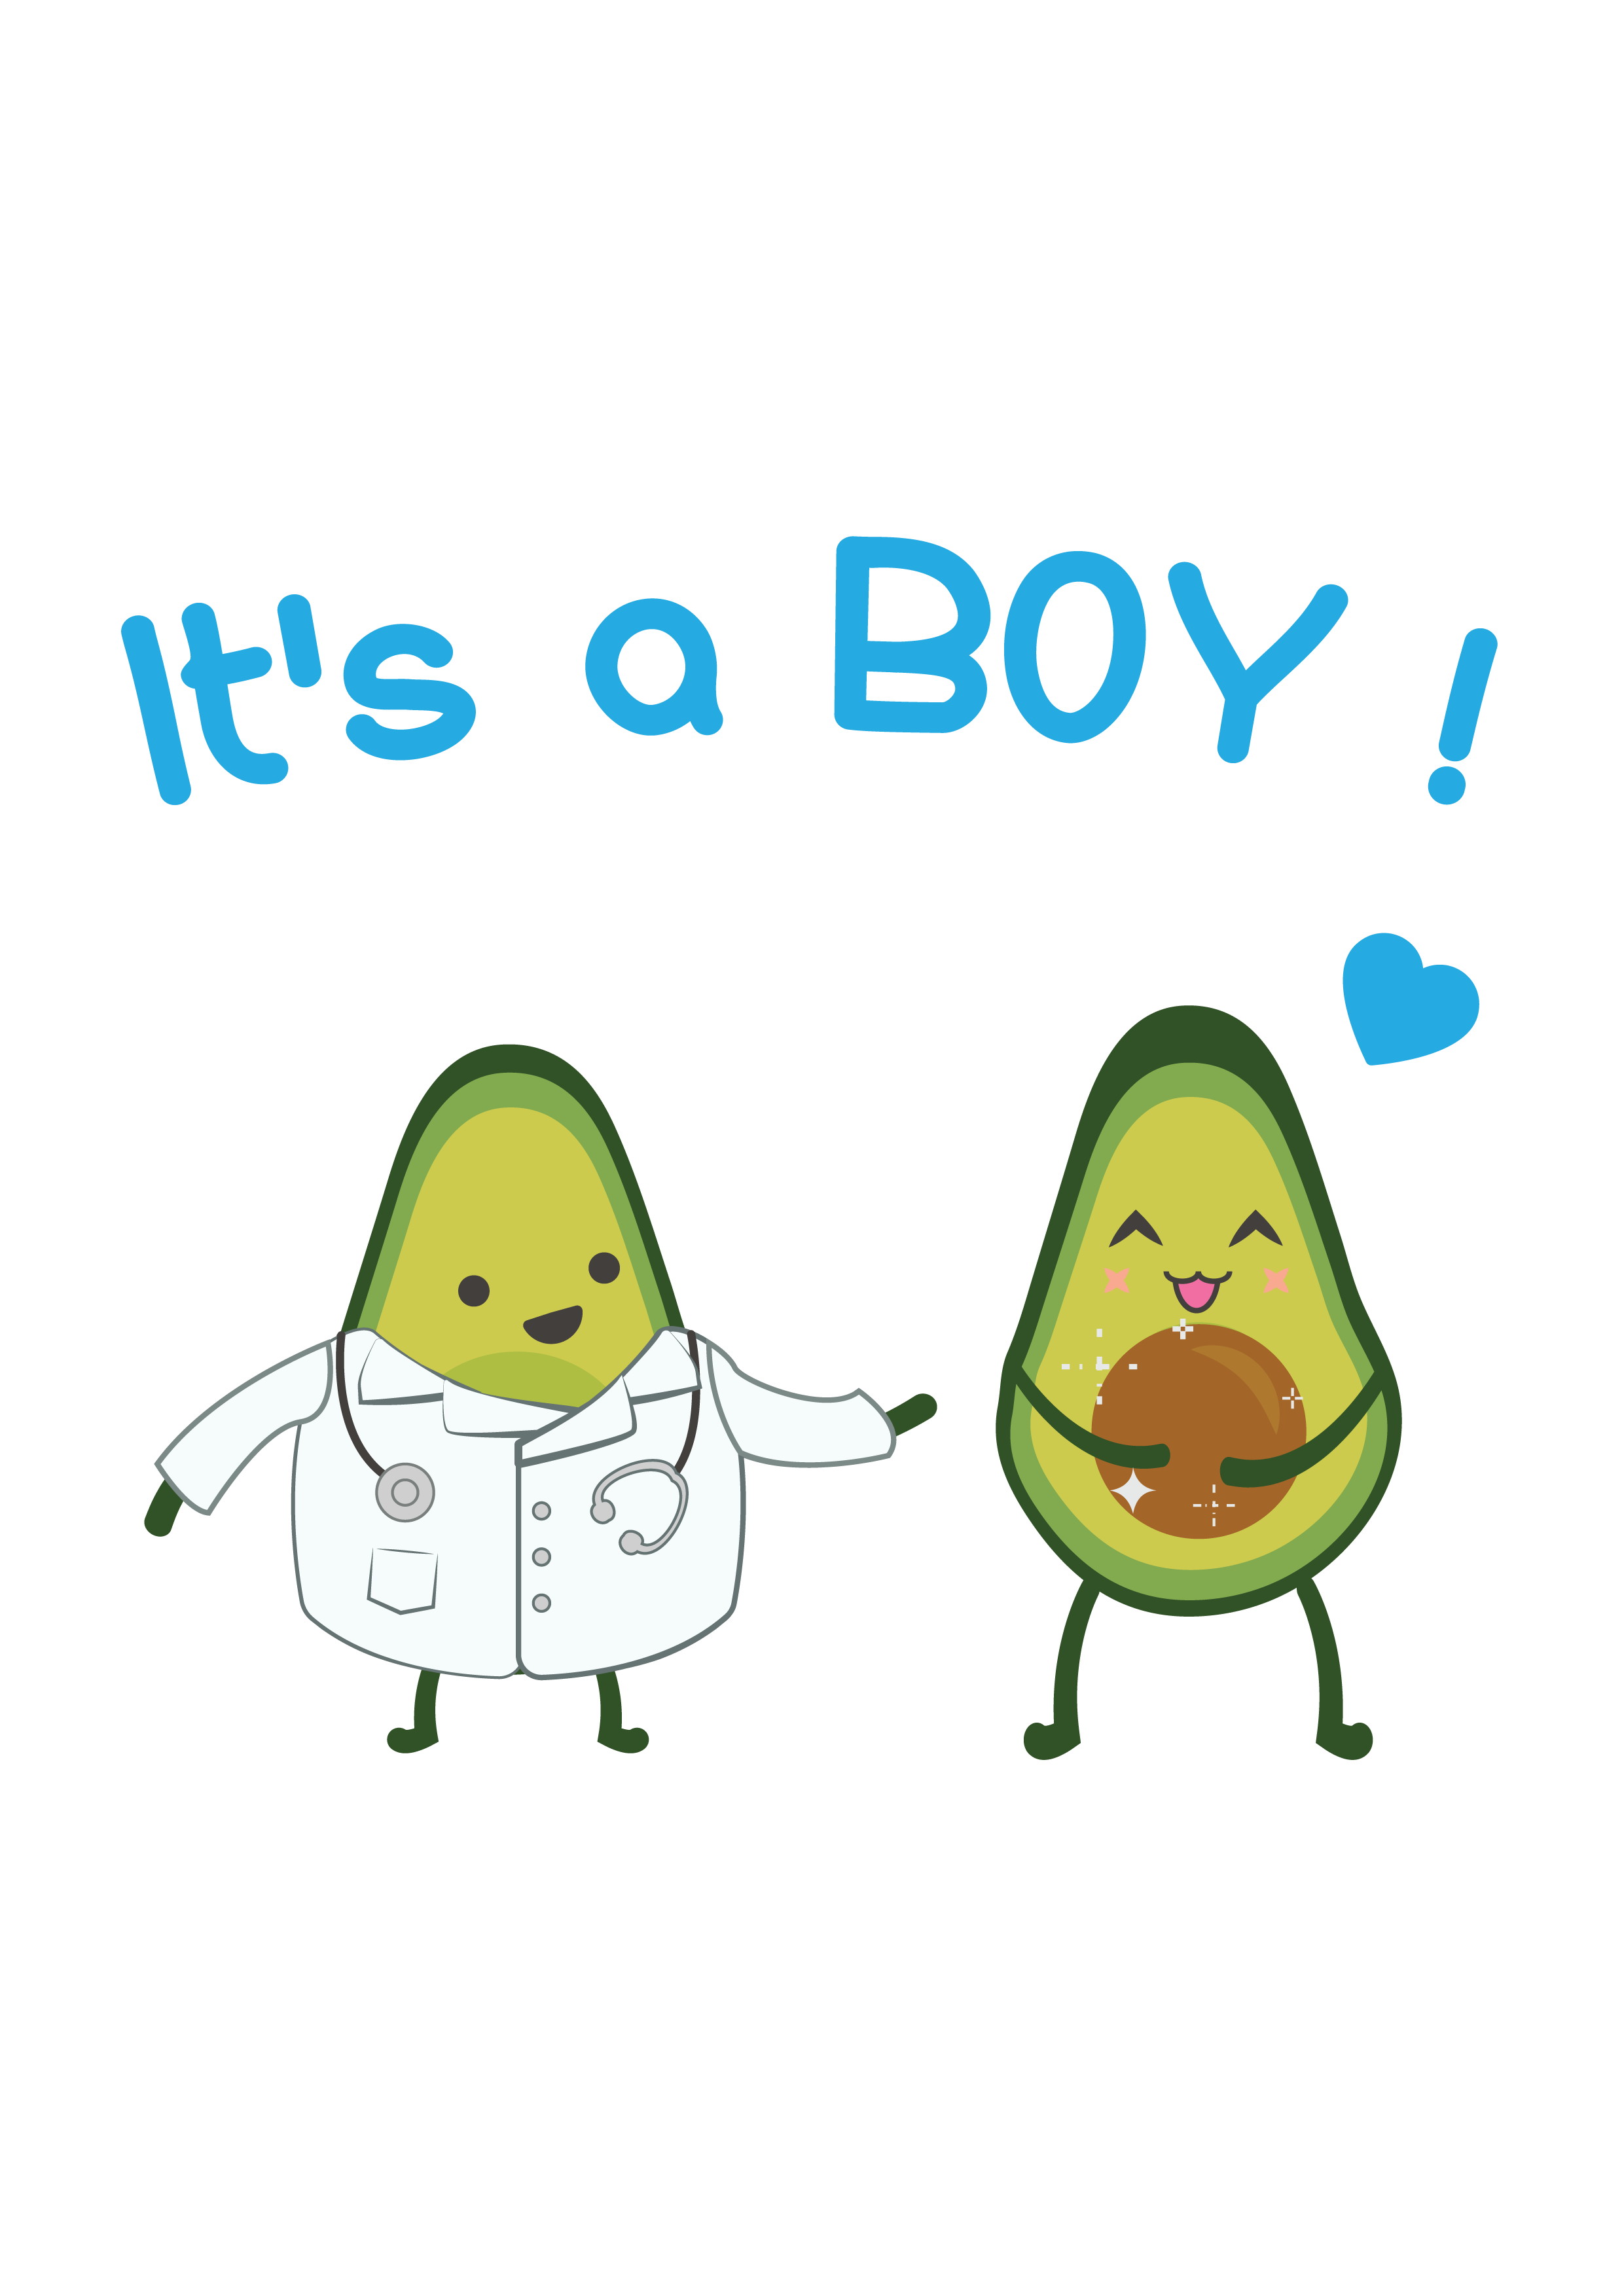 avocado clipart baby